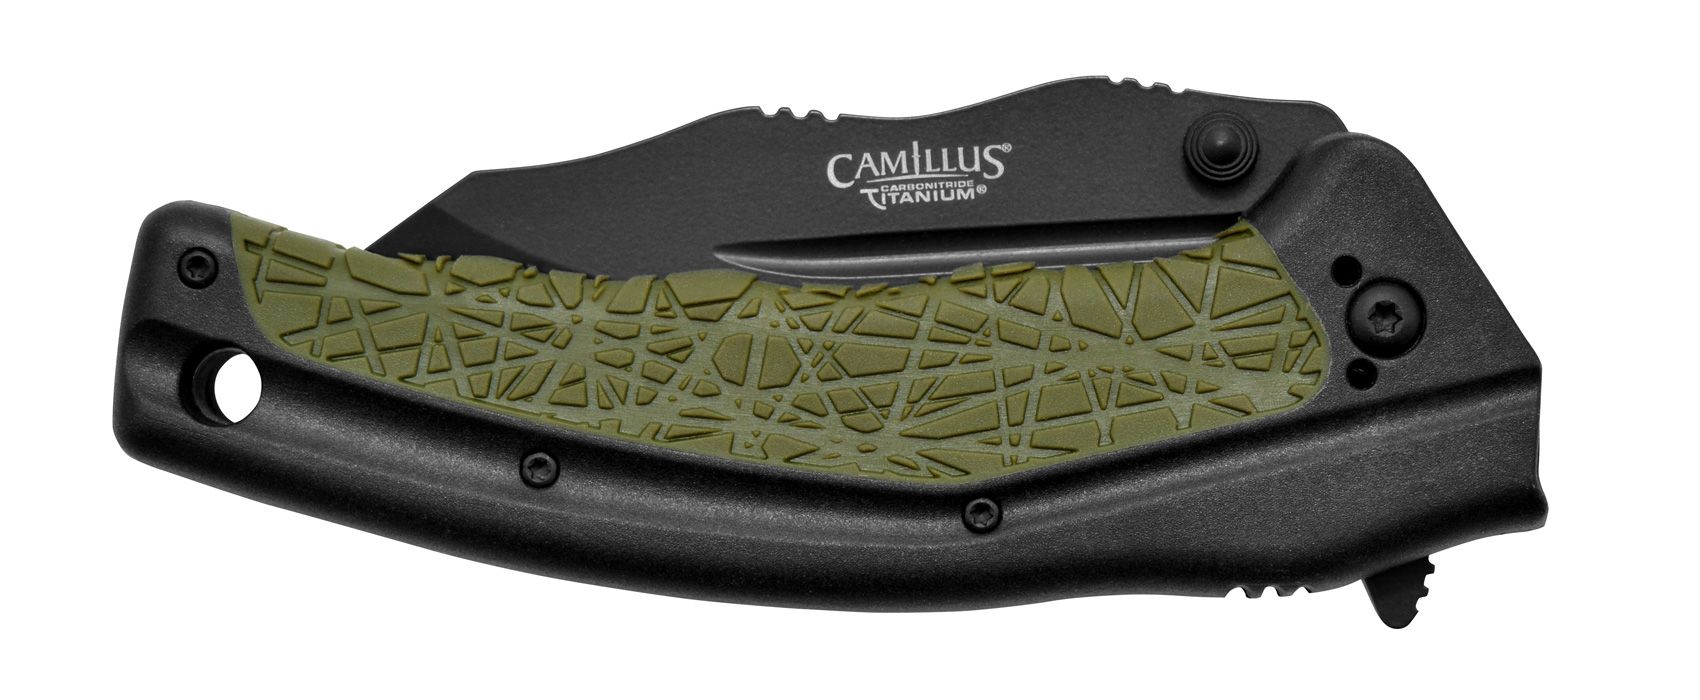 Camillus | Folding Camping Knife, Fk-7.5 7.5"